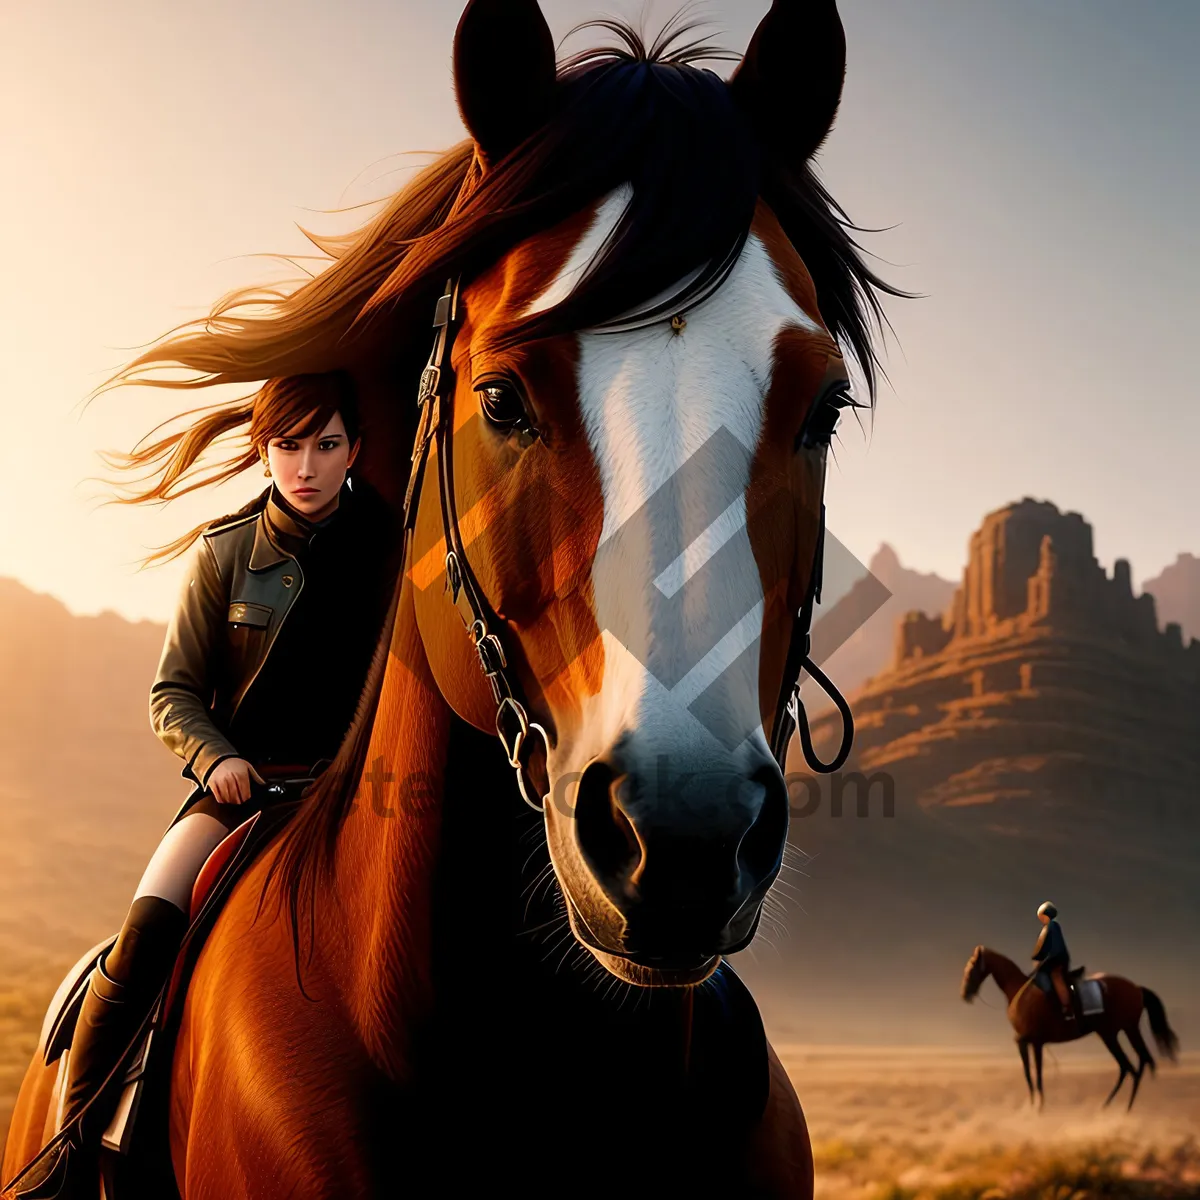 Picture of Saddle Sunset: Majestic thoroughbred stallion galloping towards the horizon.